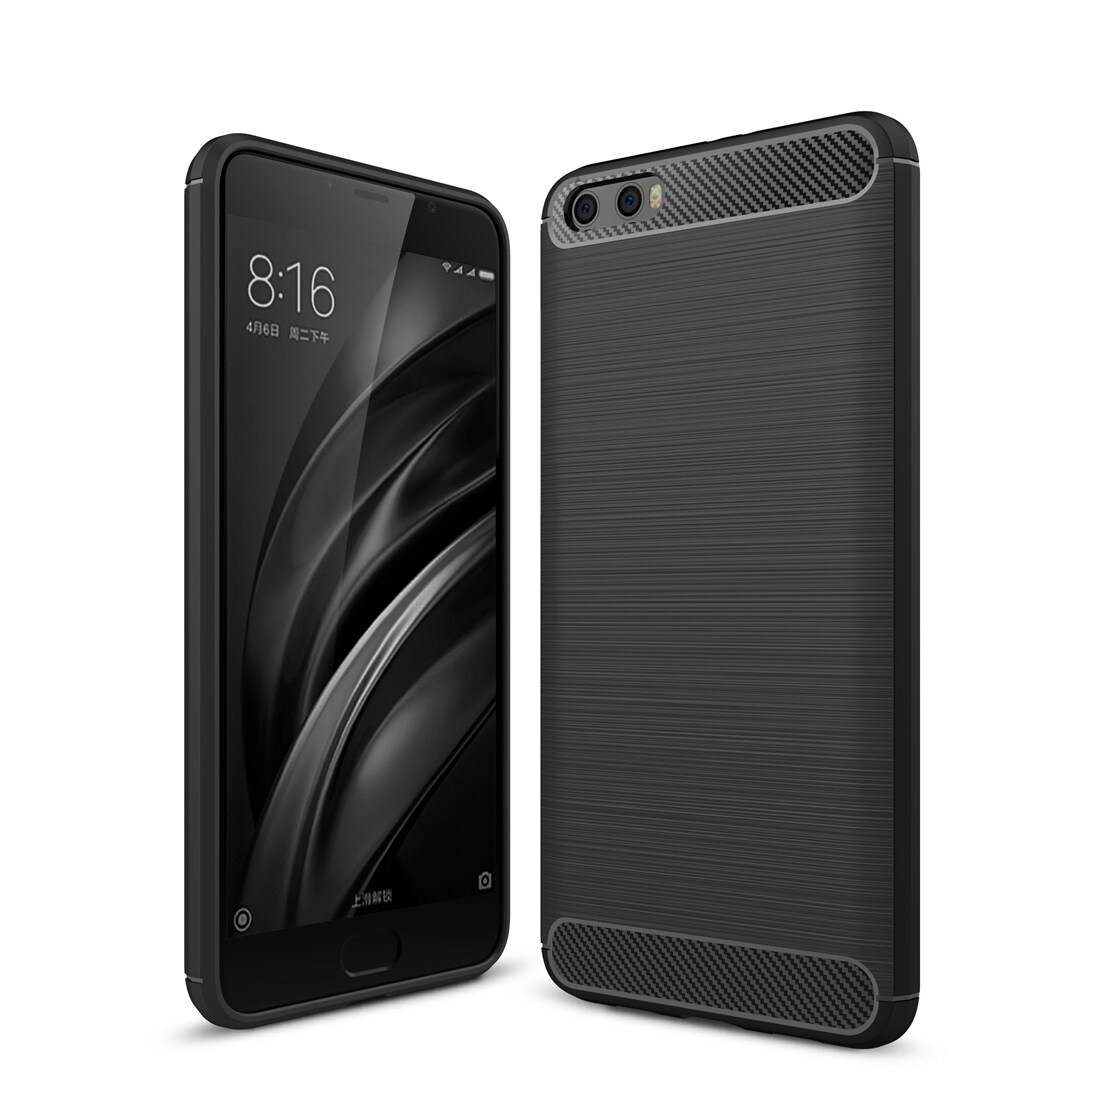 Shockproof Carbon fiber deksel Xiaomi Mi 6  Plus